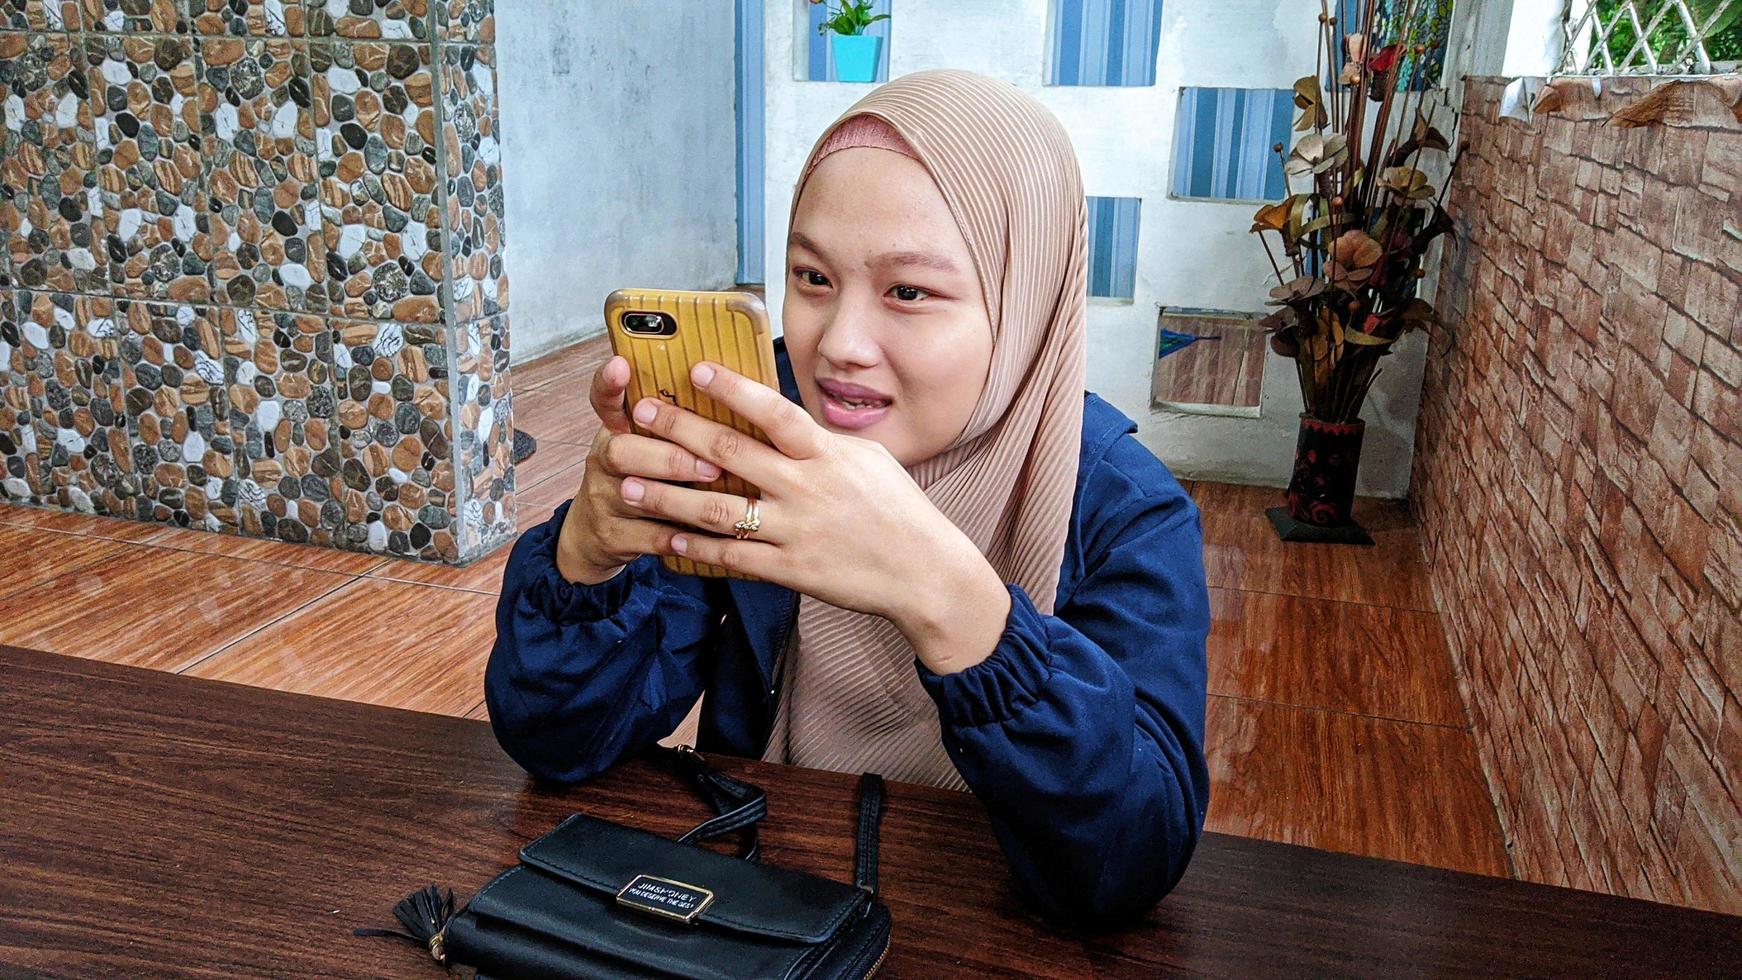 cianjur regency, west java, indonesia il 7 aprile 2022 - una donna musulmana indonesiana che indossa un hijab tiene in mano uno smartphone. foto